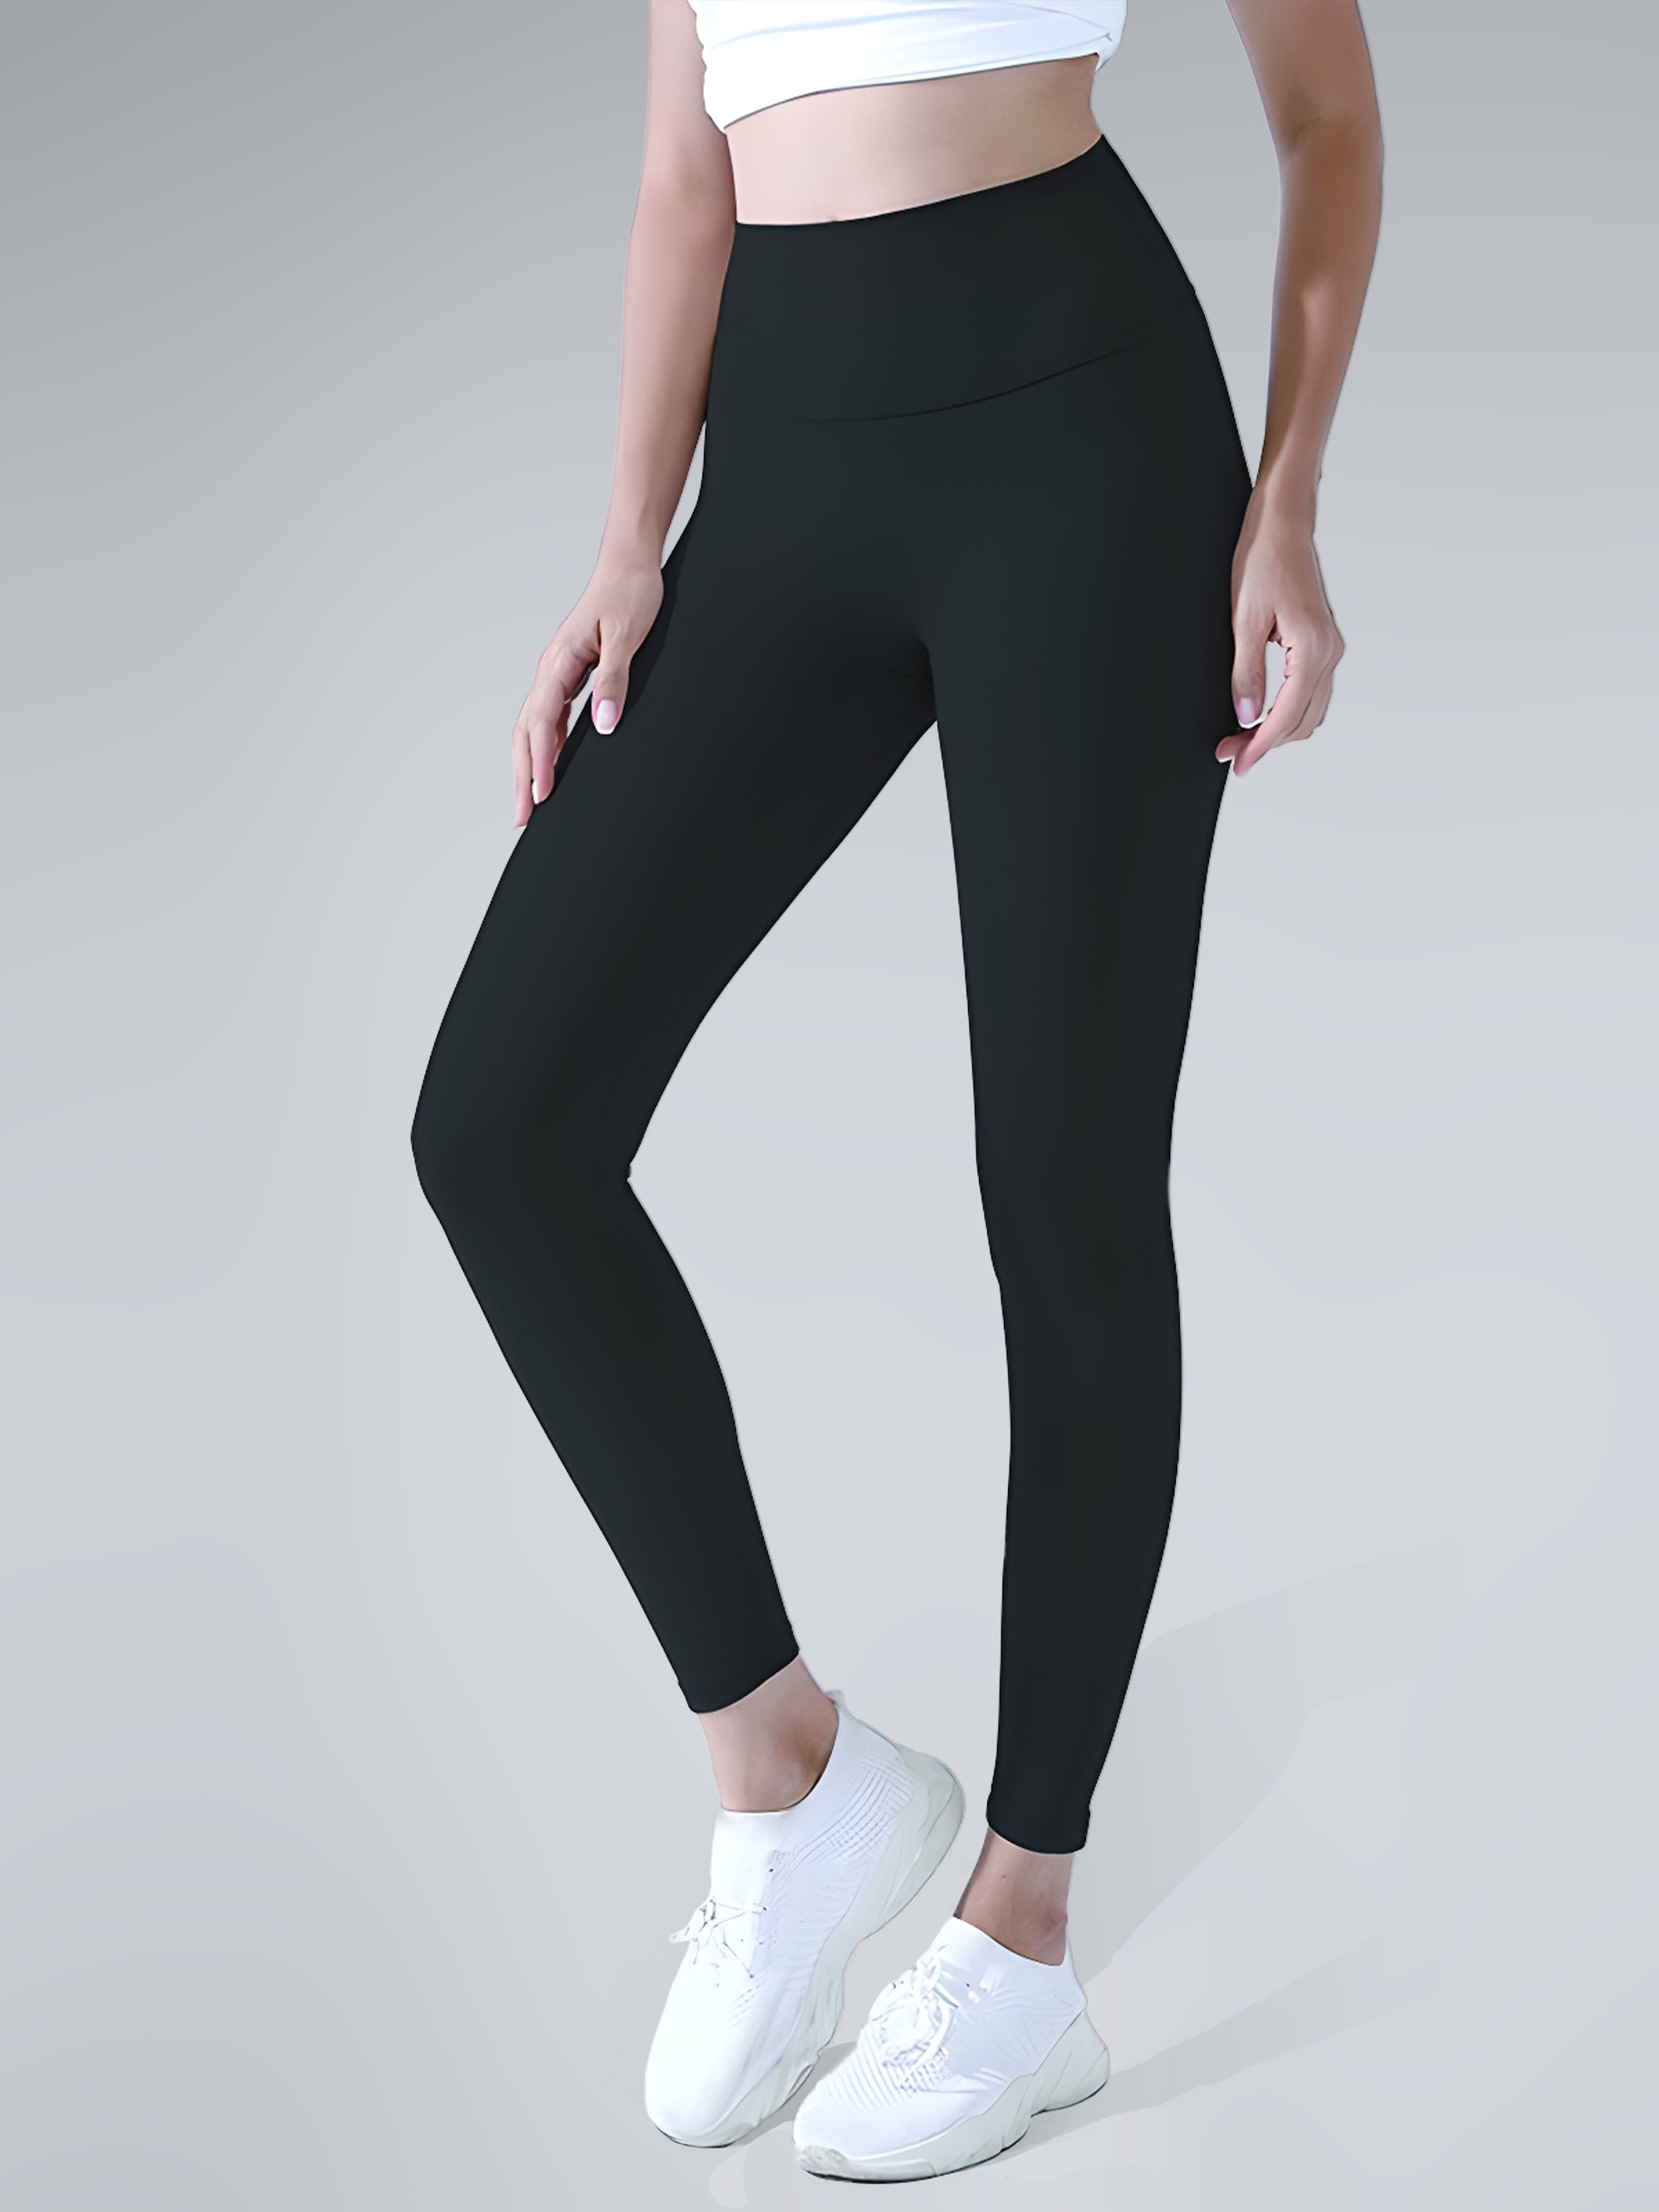 Ultra Seamless Leggings - Black: High-Waist, Stylish Activewear